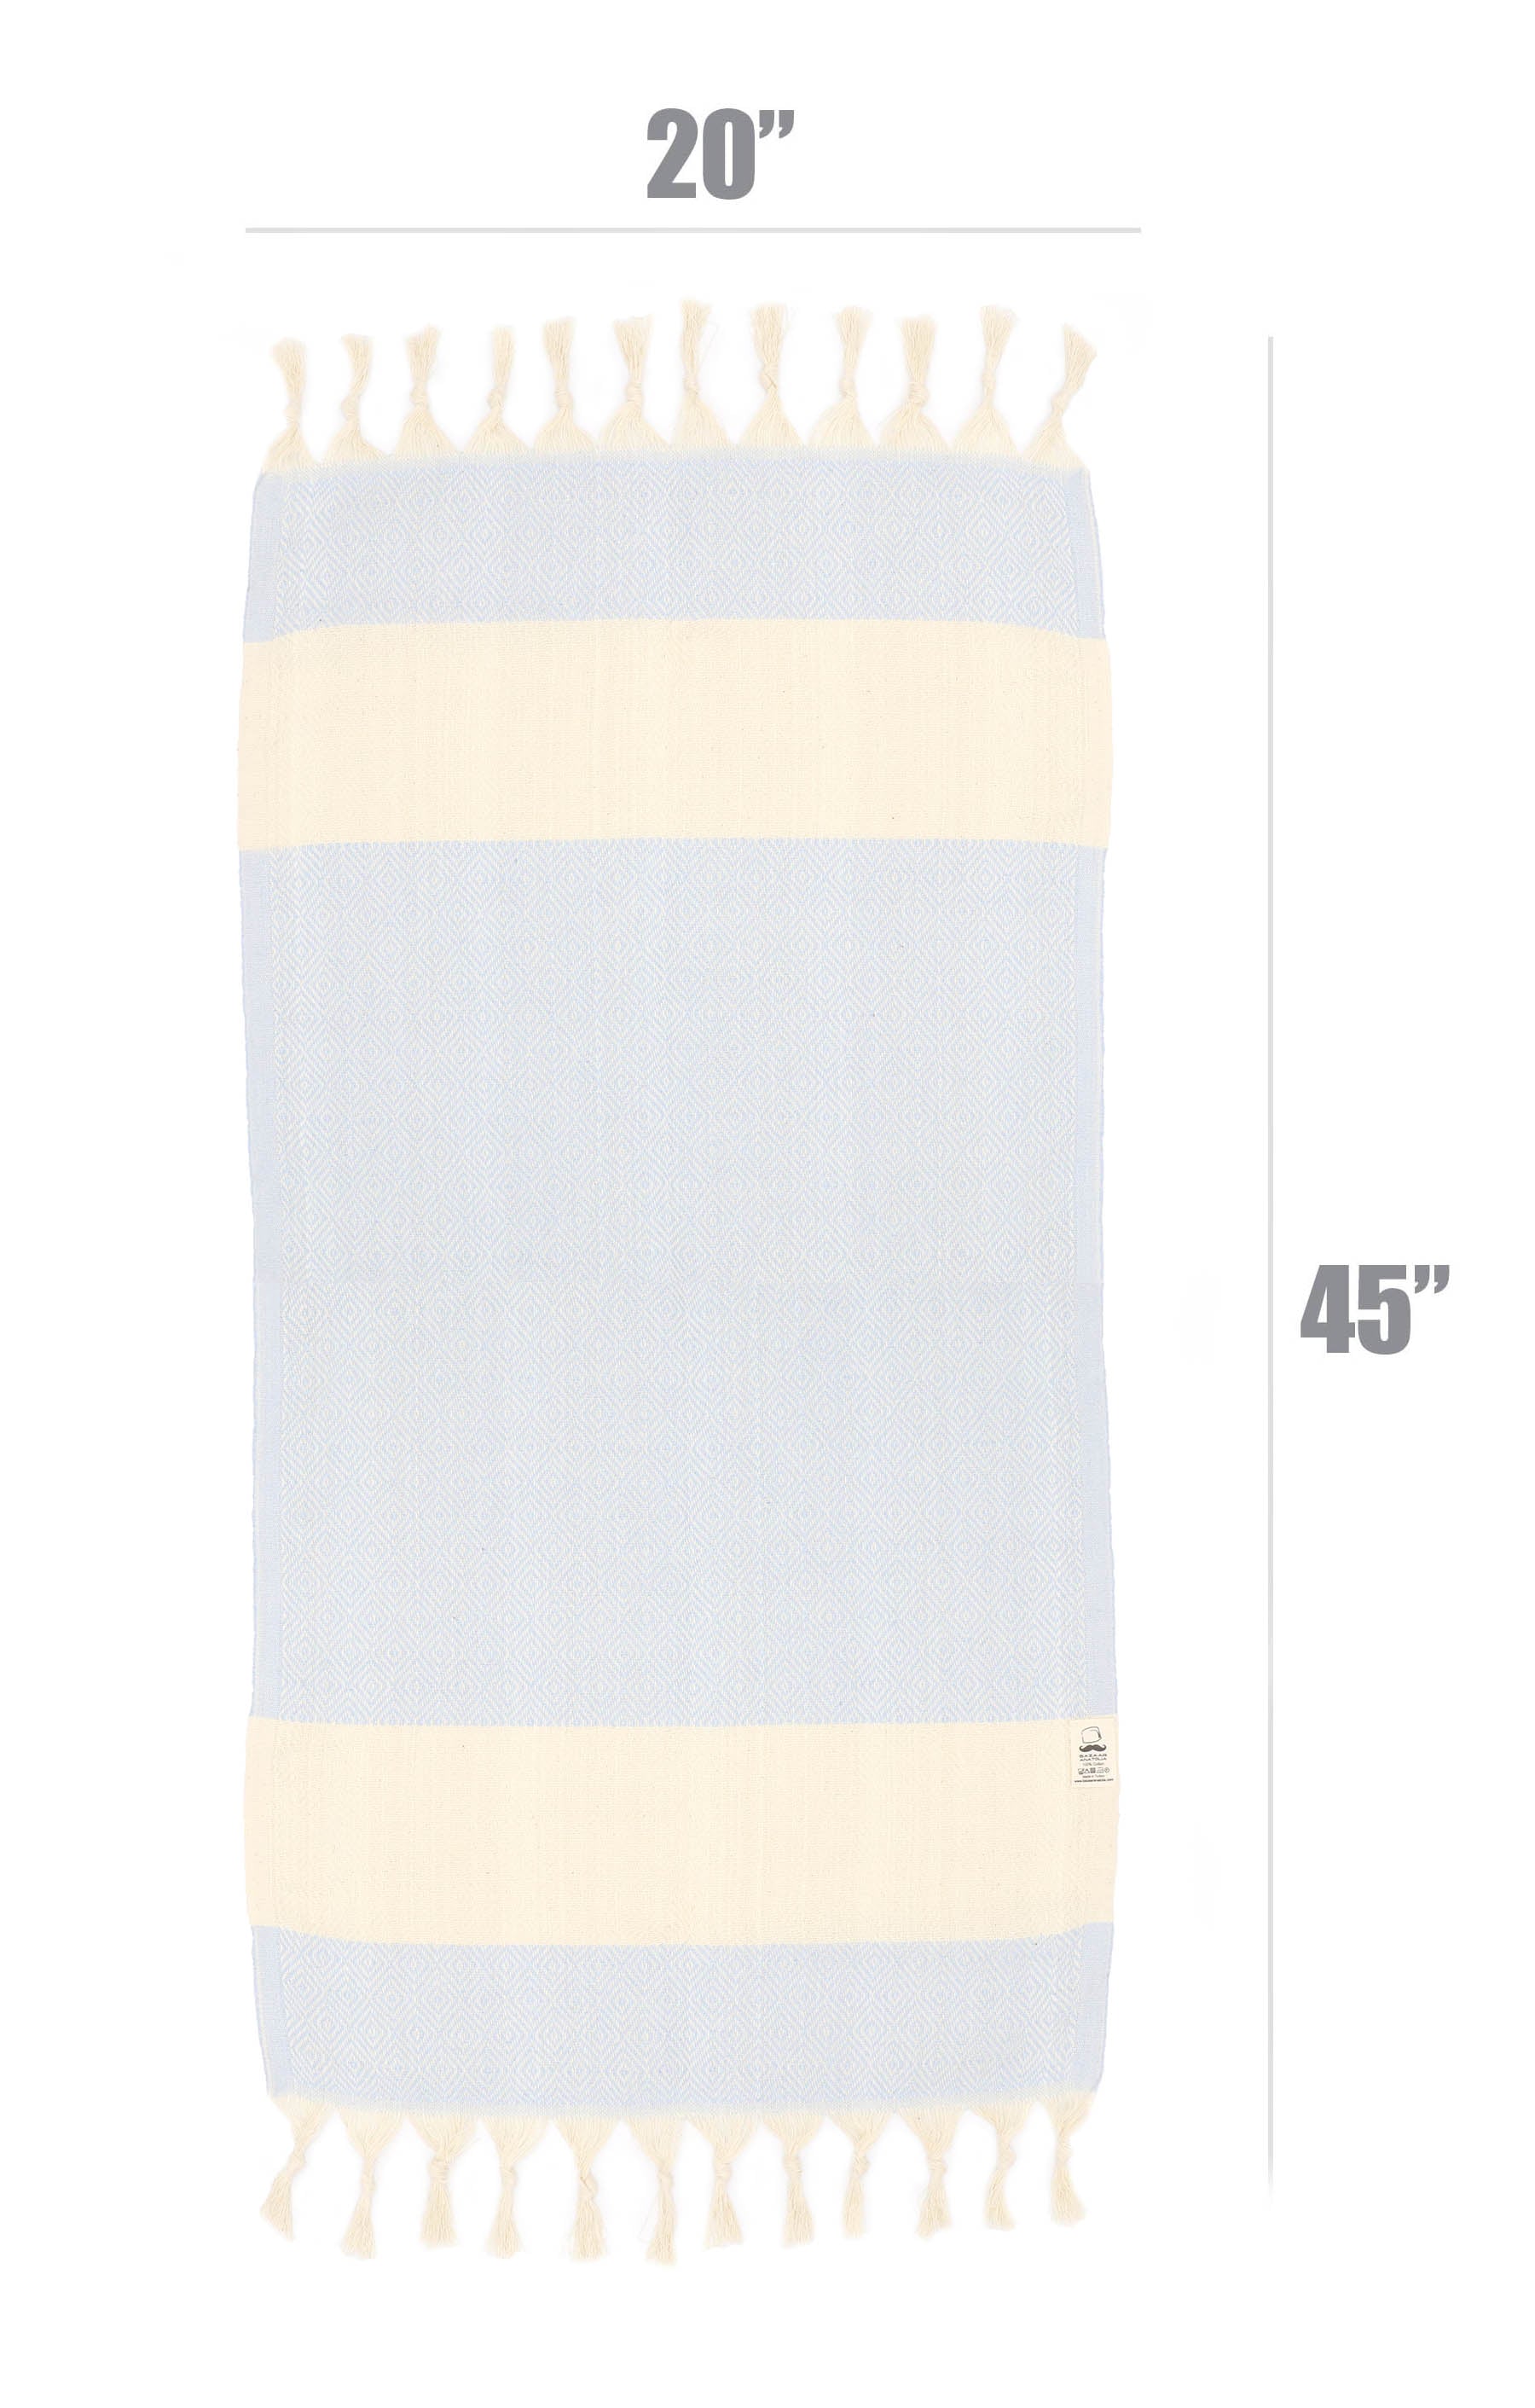 Deerlux 100% Cotton Turkish Hand Towels Set of 2 18 x 40 Diamond Peshtemal Kitchen and Bath Towels Navy